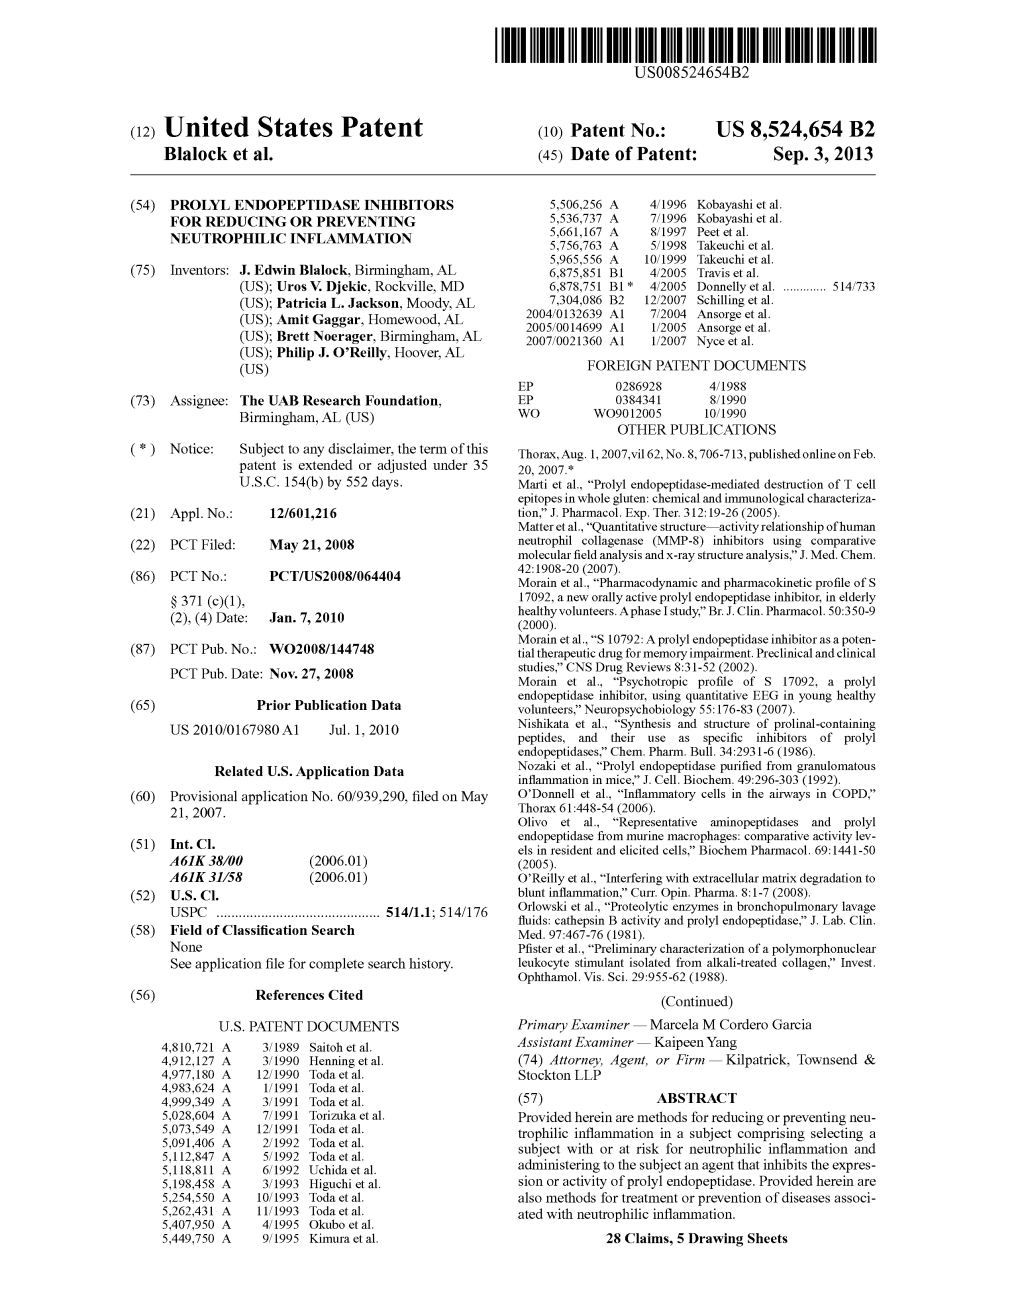 (12) United States Patent (10) Patent No.: US 8,524,654 B2 Blalock Et Al